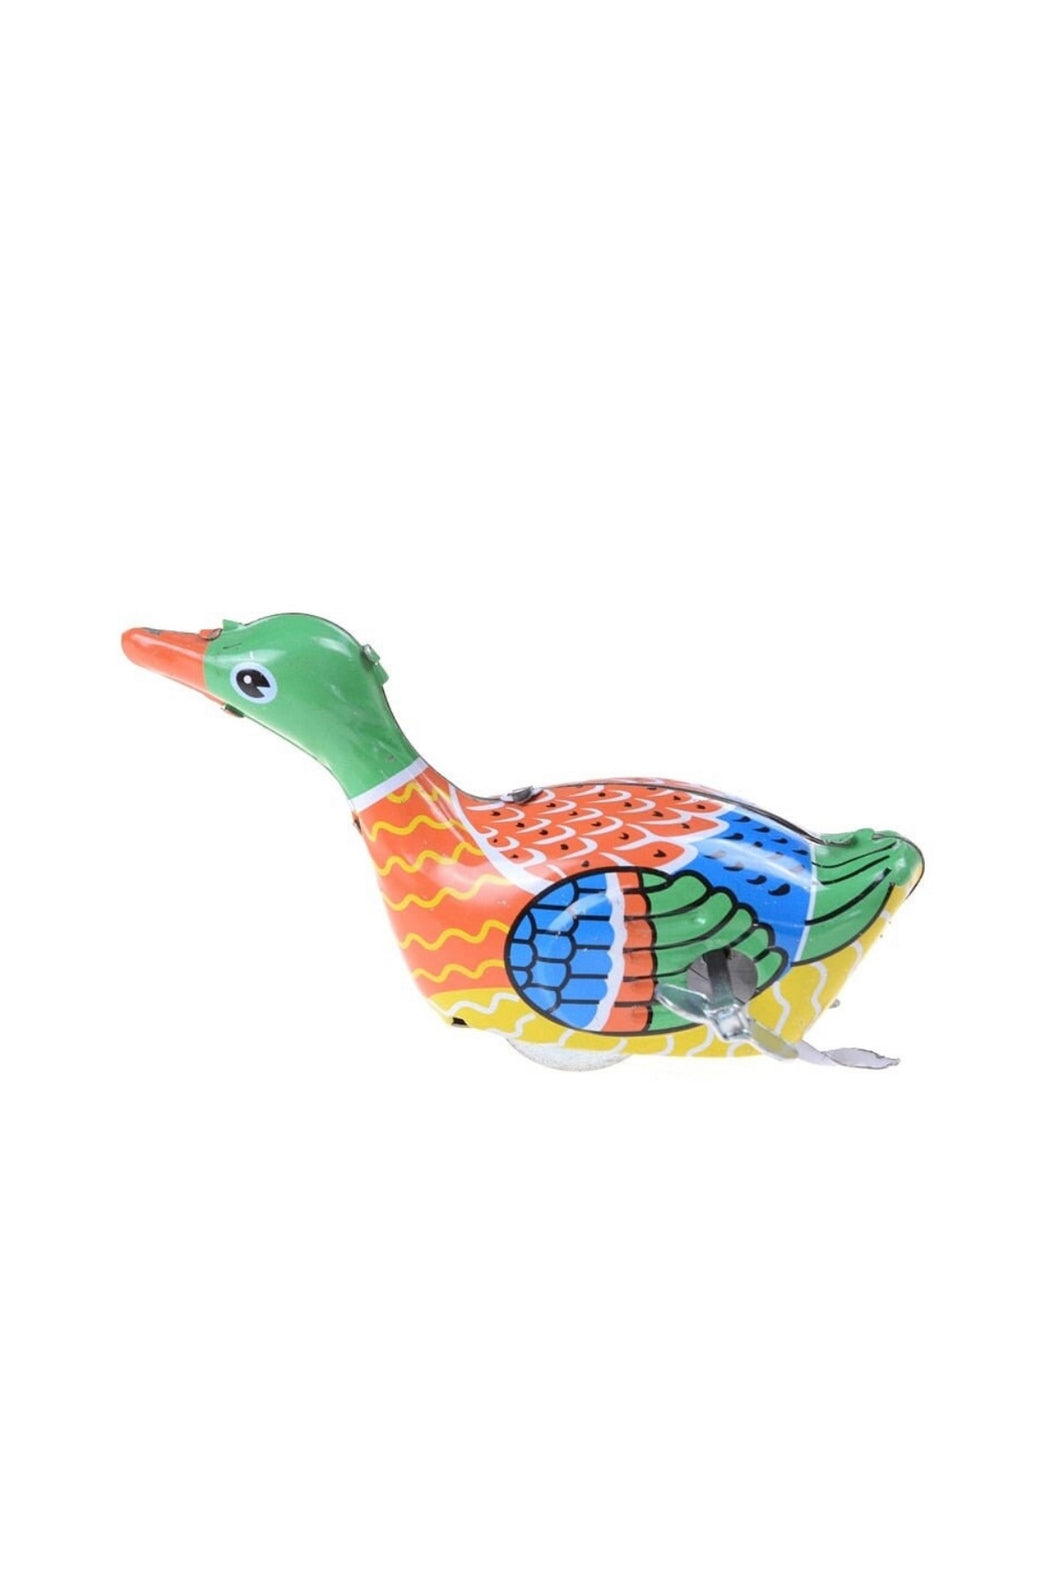 Wind-Up Vintage Duck